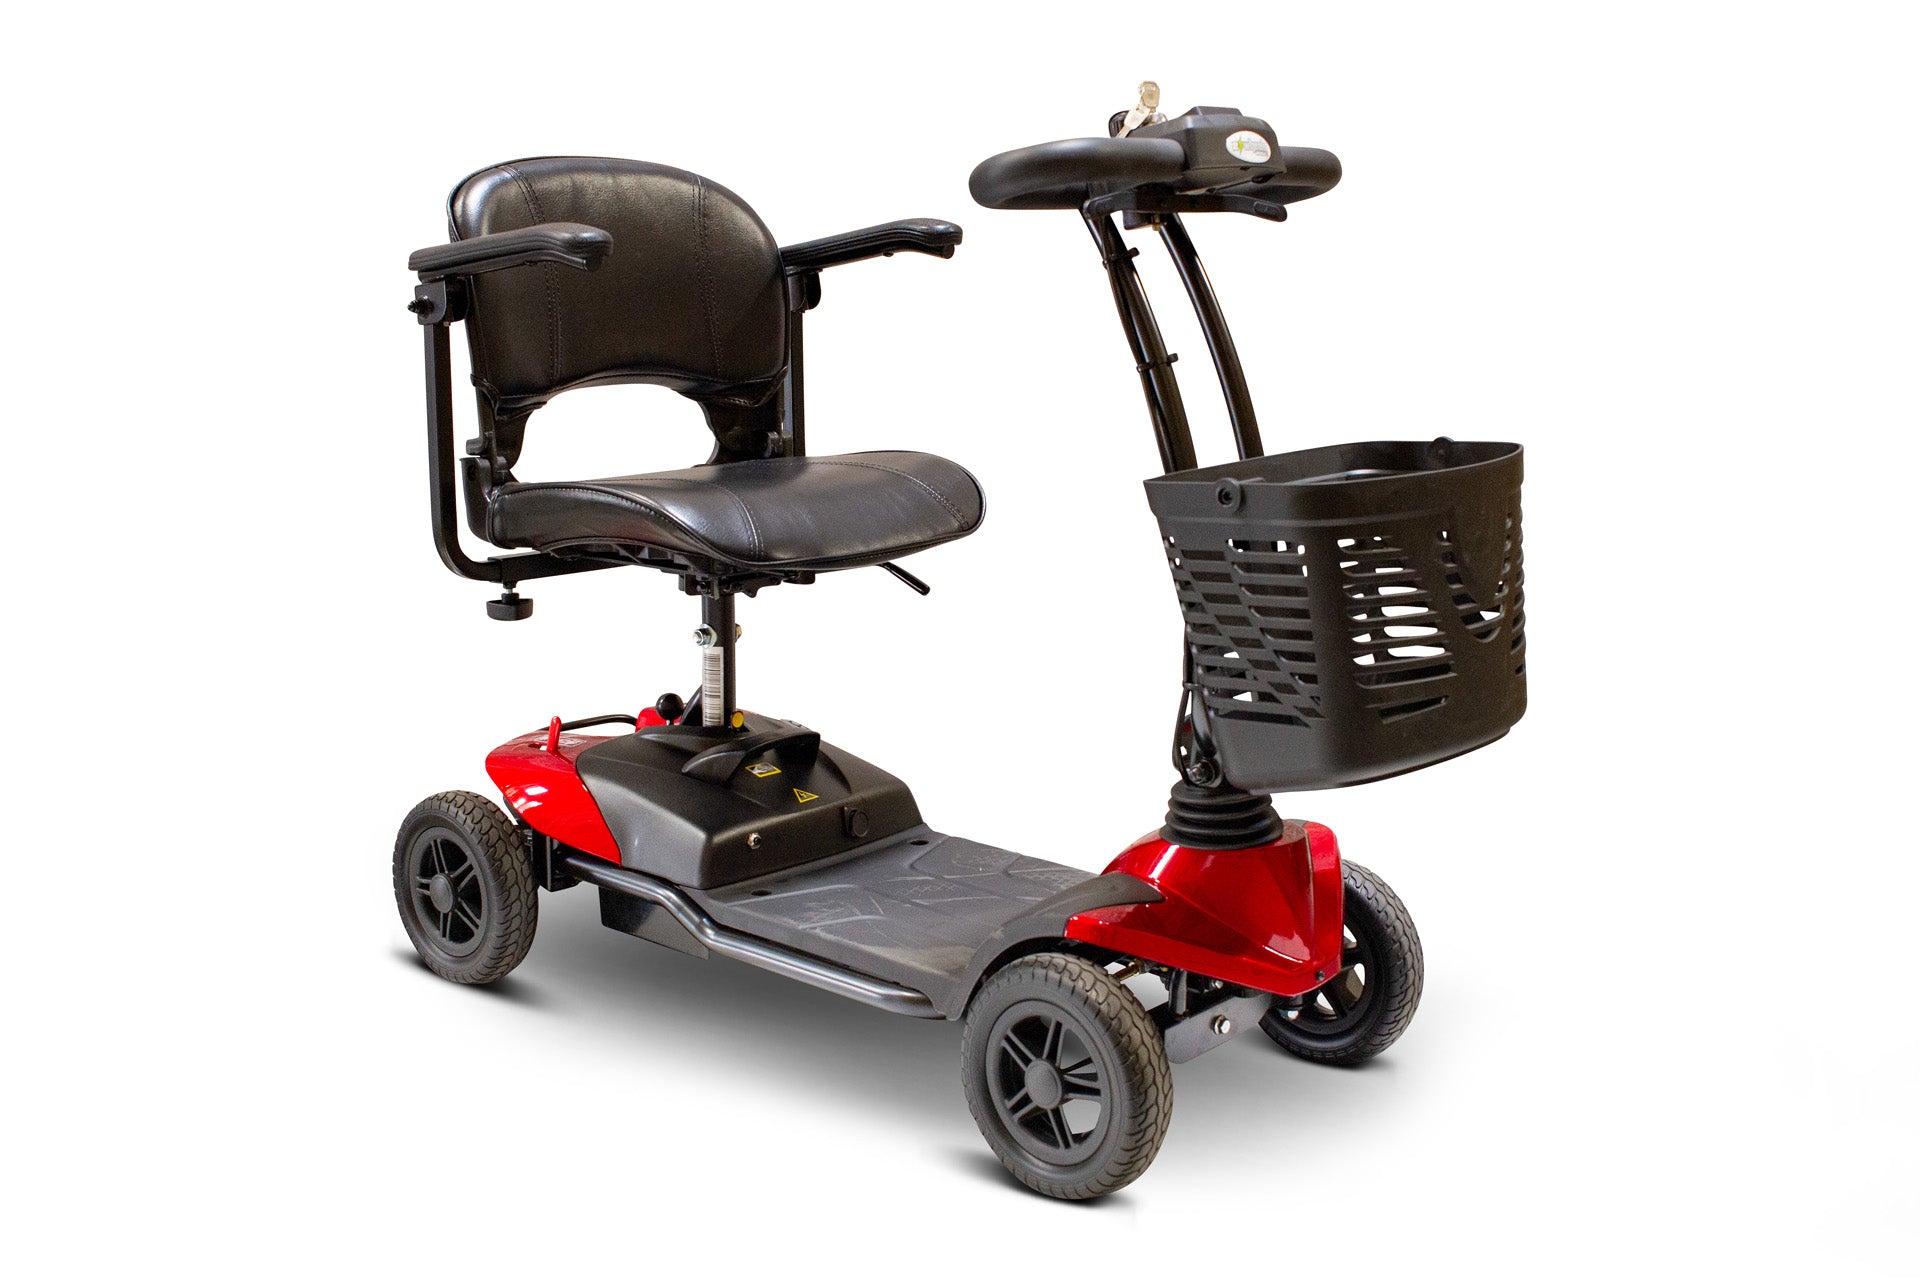 eWheels - 4 Wheels Lightweight Mobility Scooter - 300lbs Weight Capacity - EW-M35